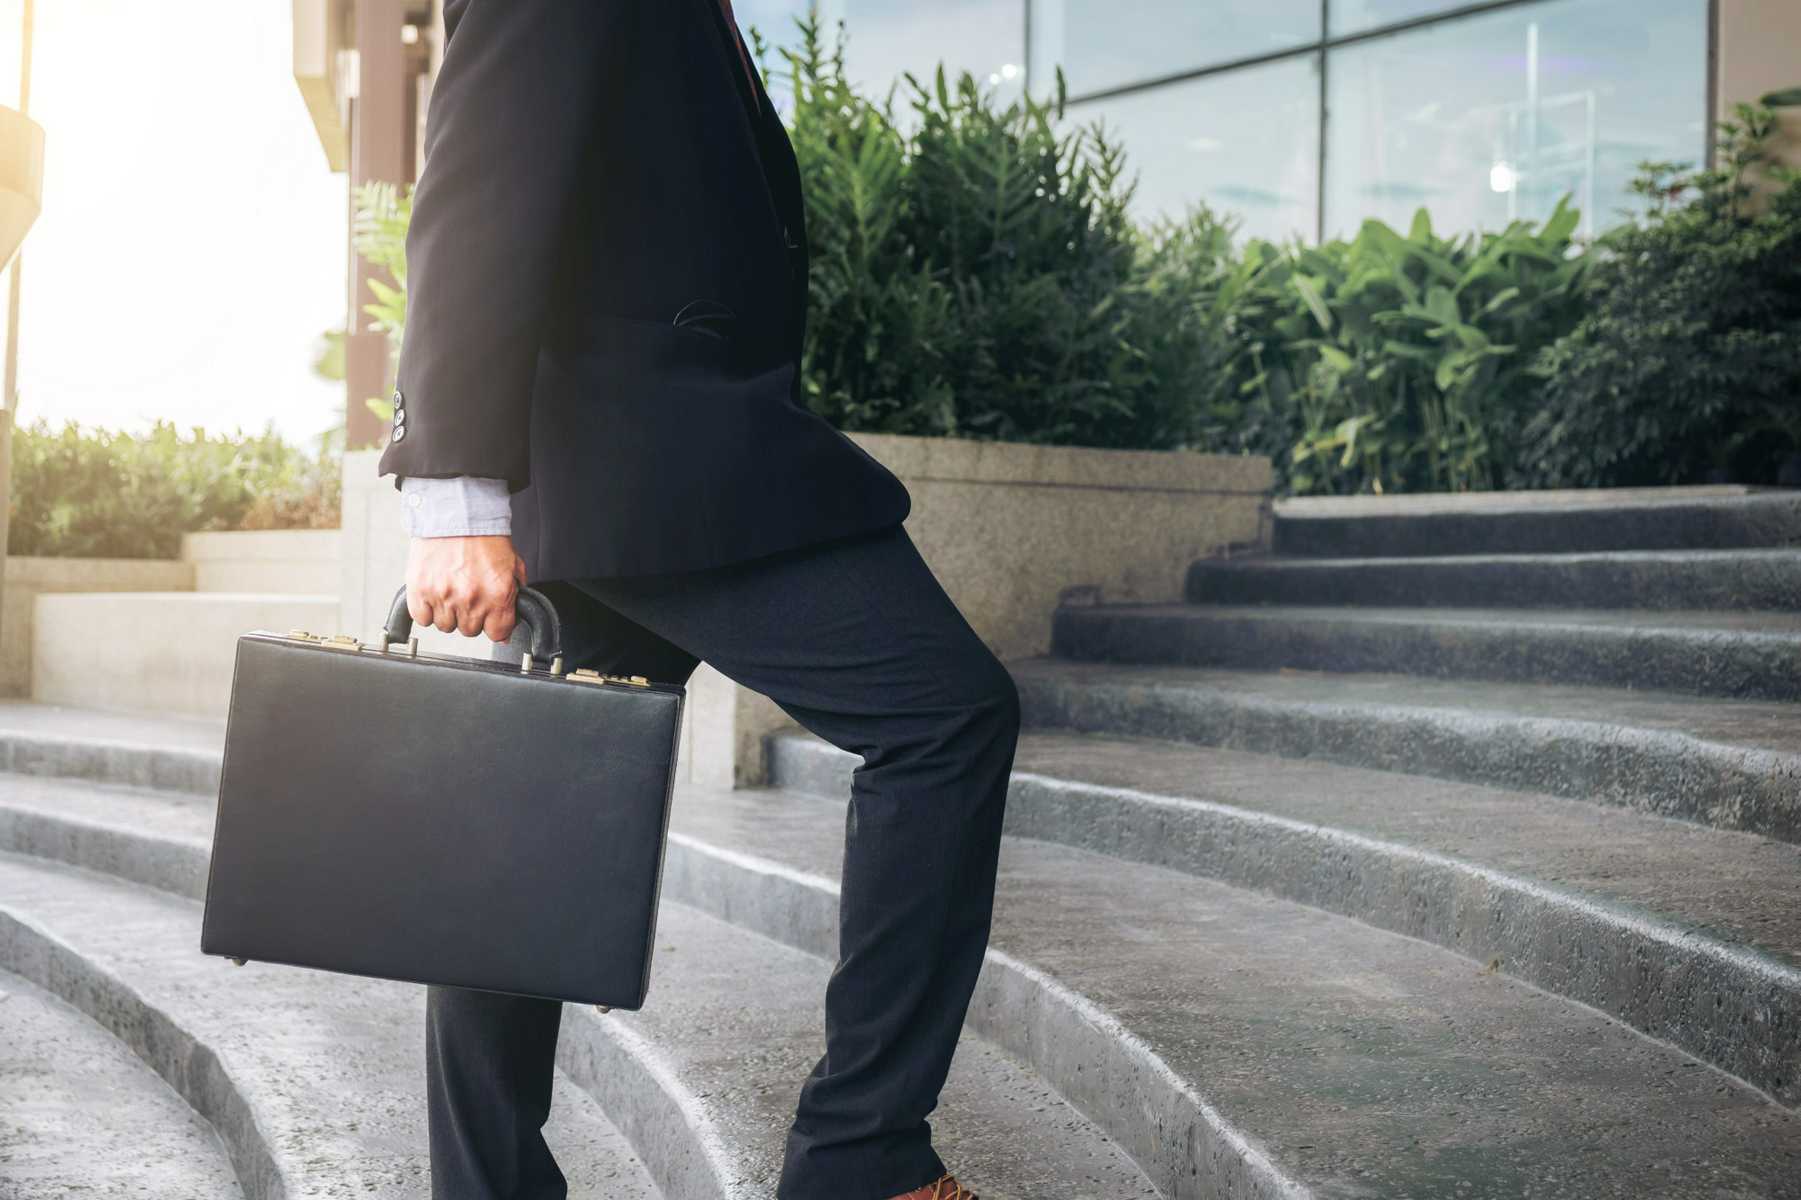 man holding briefcase